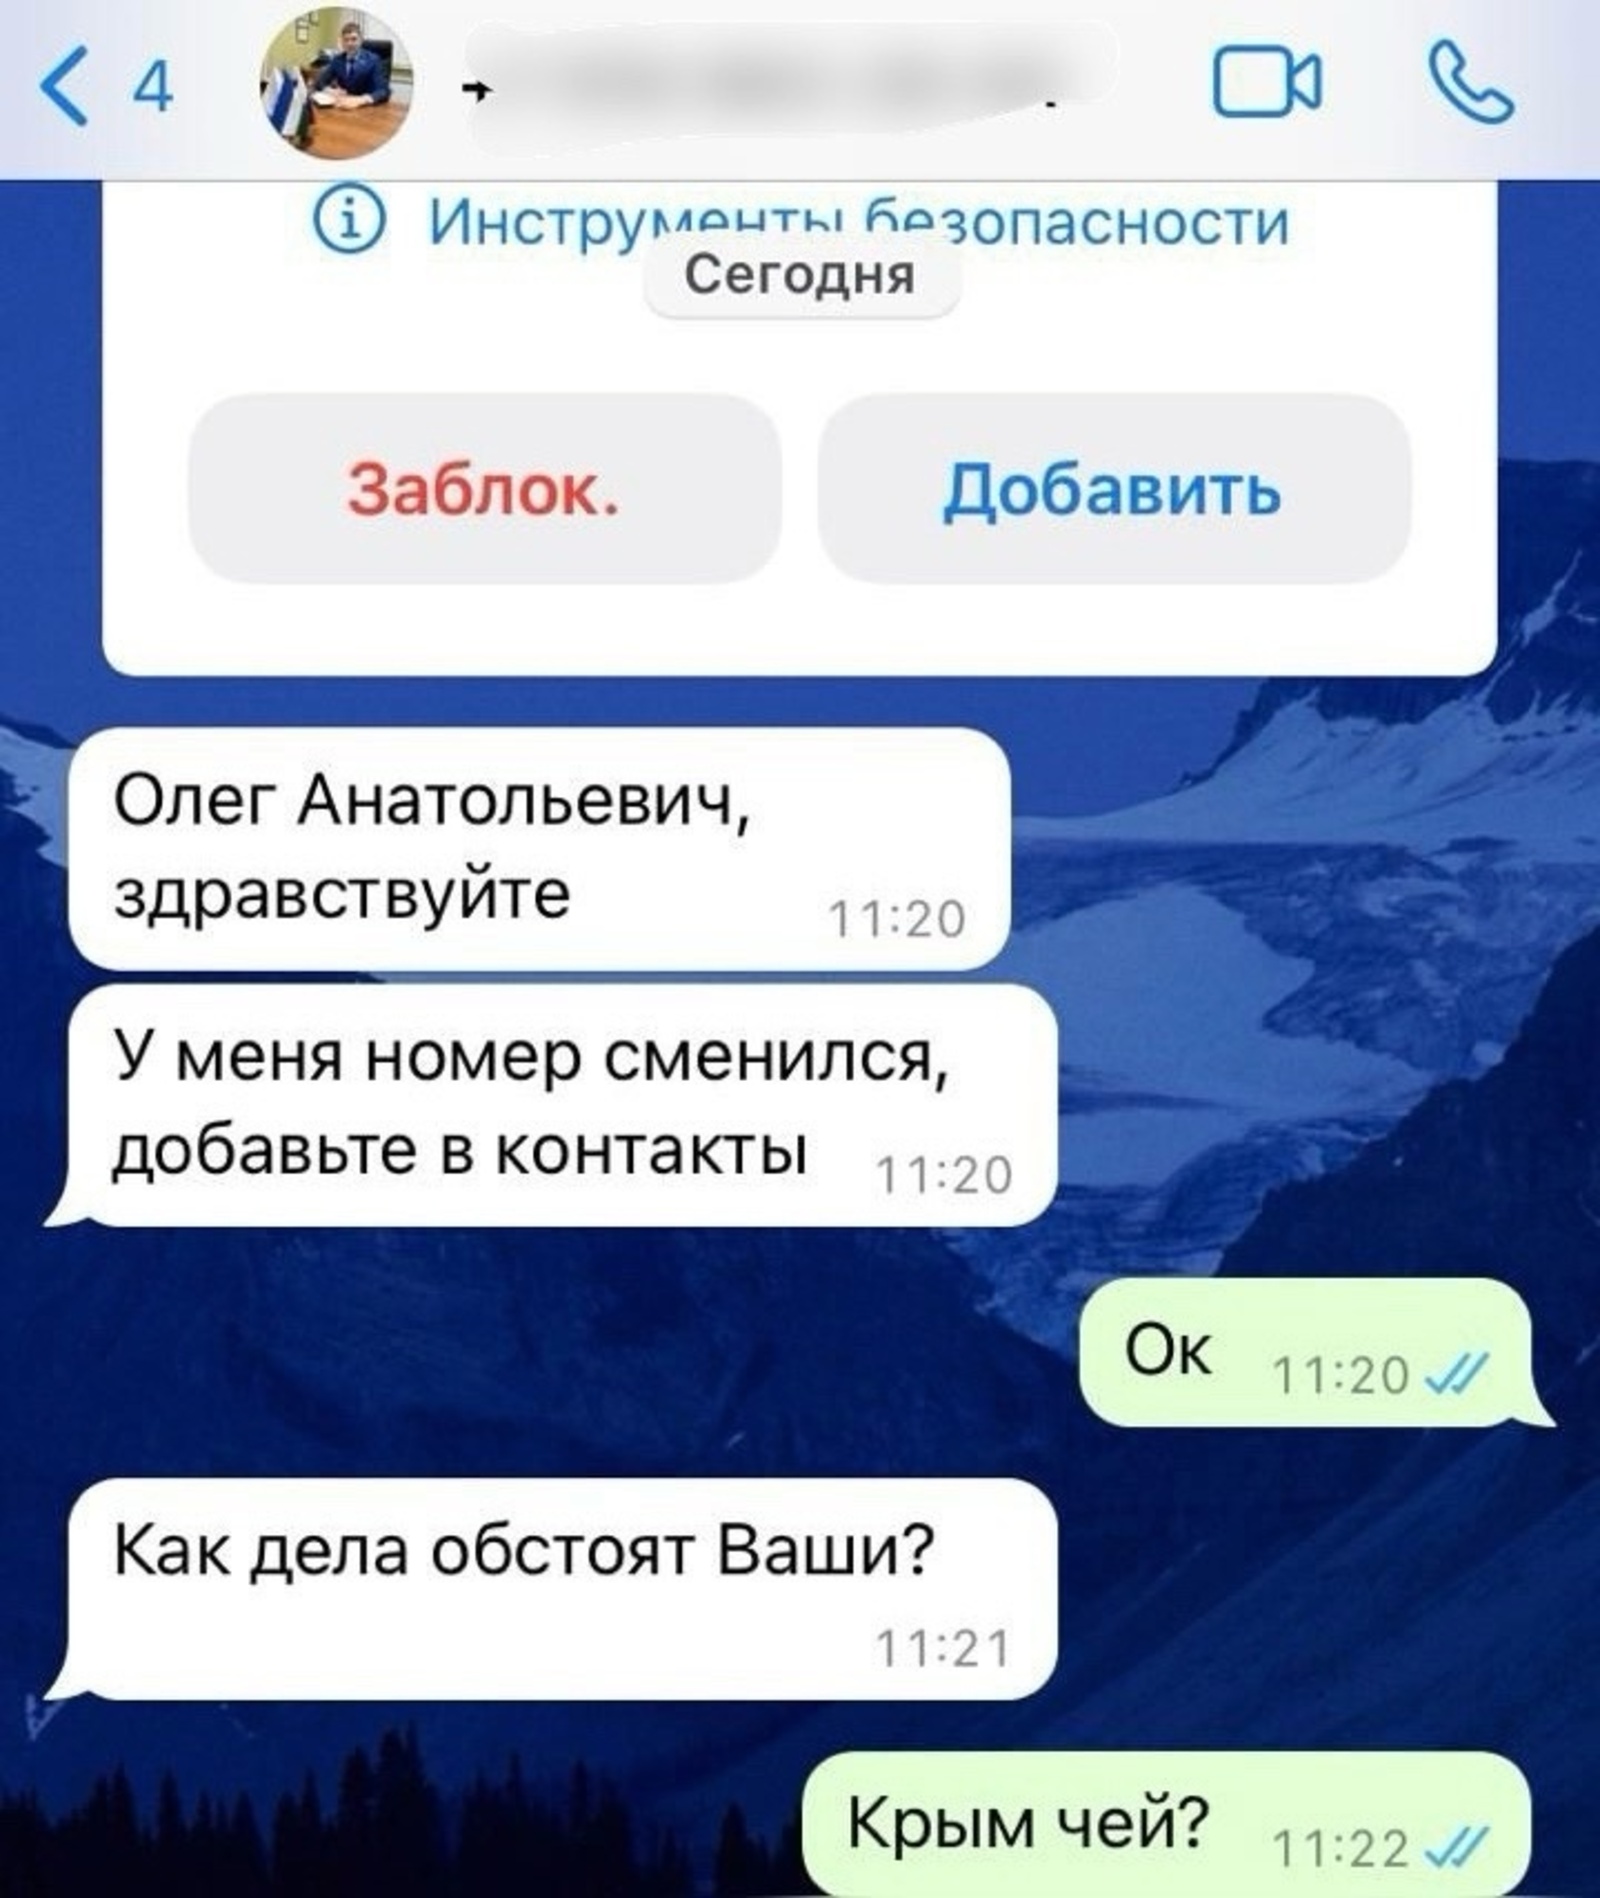 Олег Астахов: "Крым чей?"